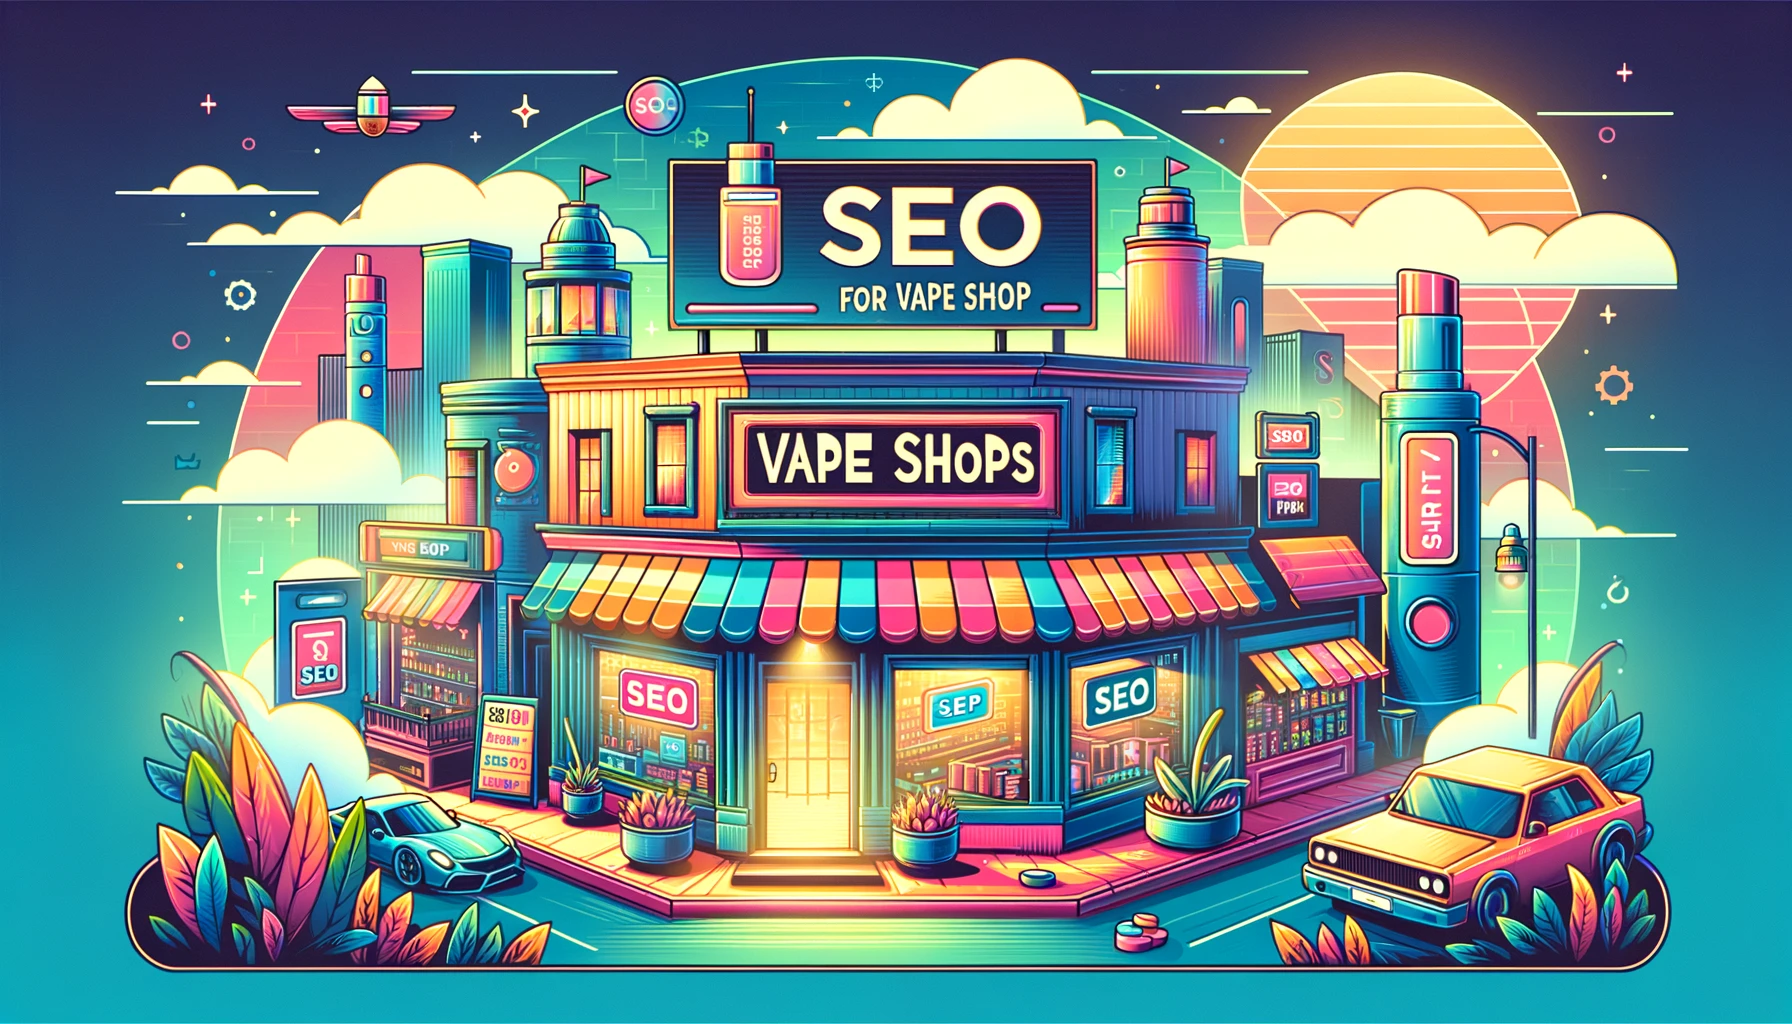 optimize vape shop's website for better search engine rankings